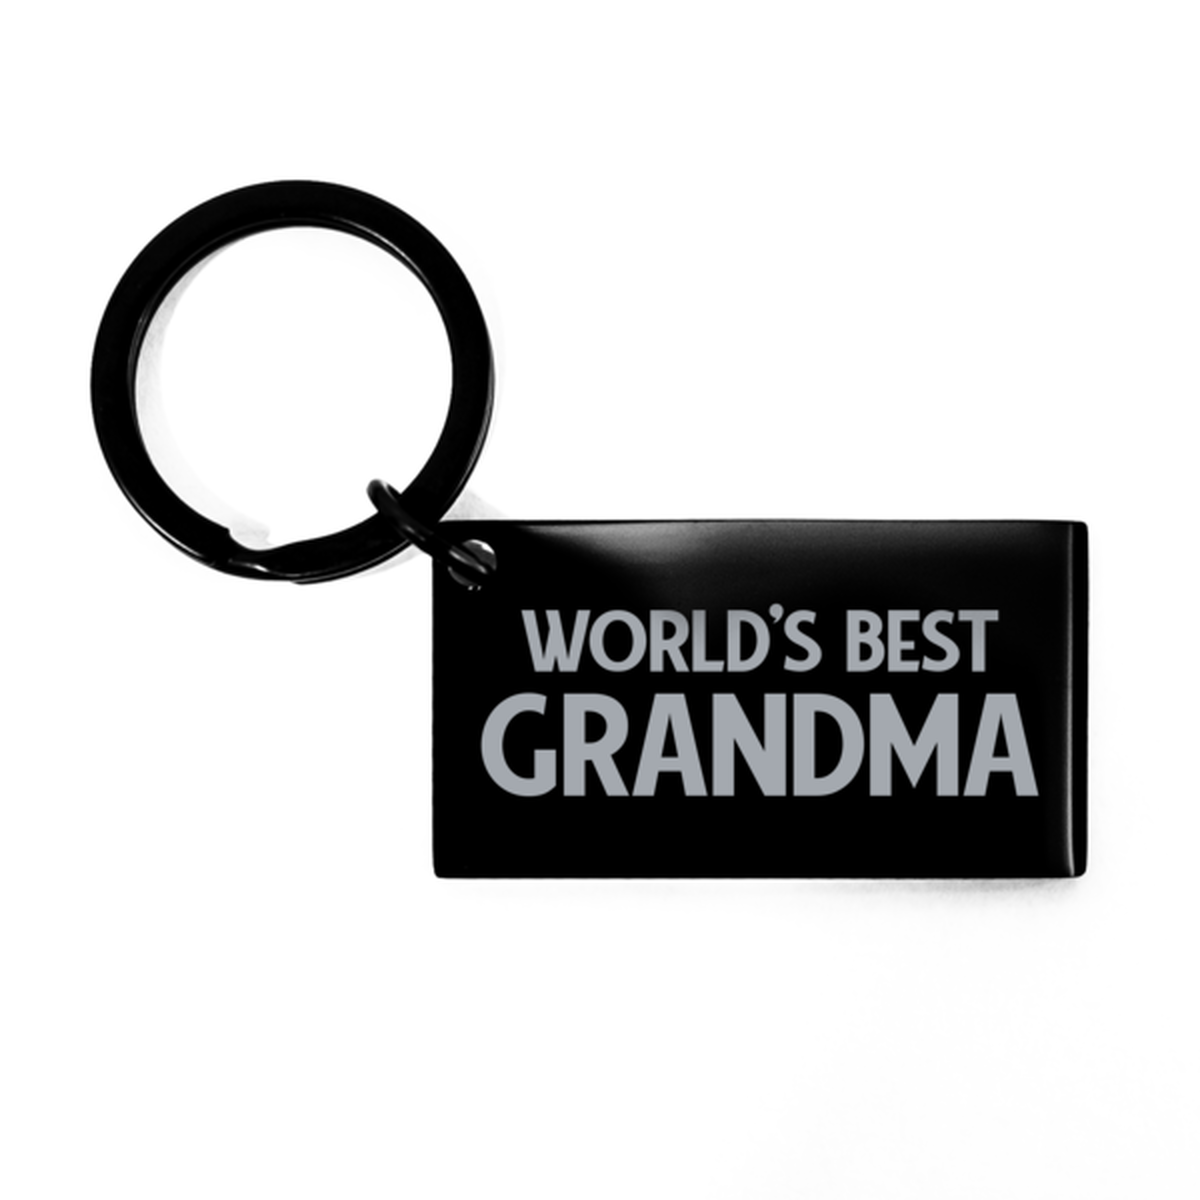 Worlds Best Grandma Gifts, Funny Black Engraved Keychain For Grandma, Birthday Presents For Women